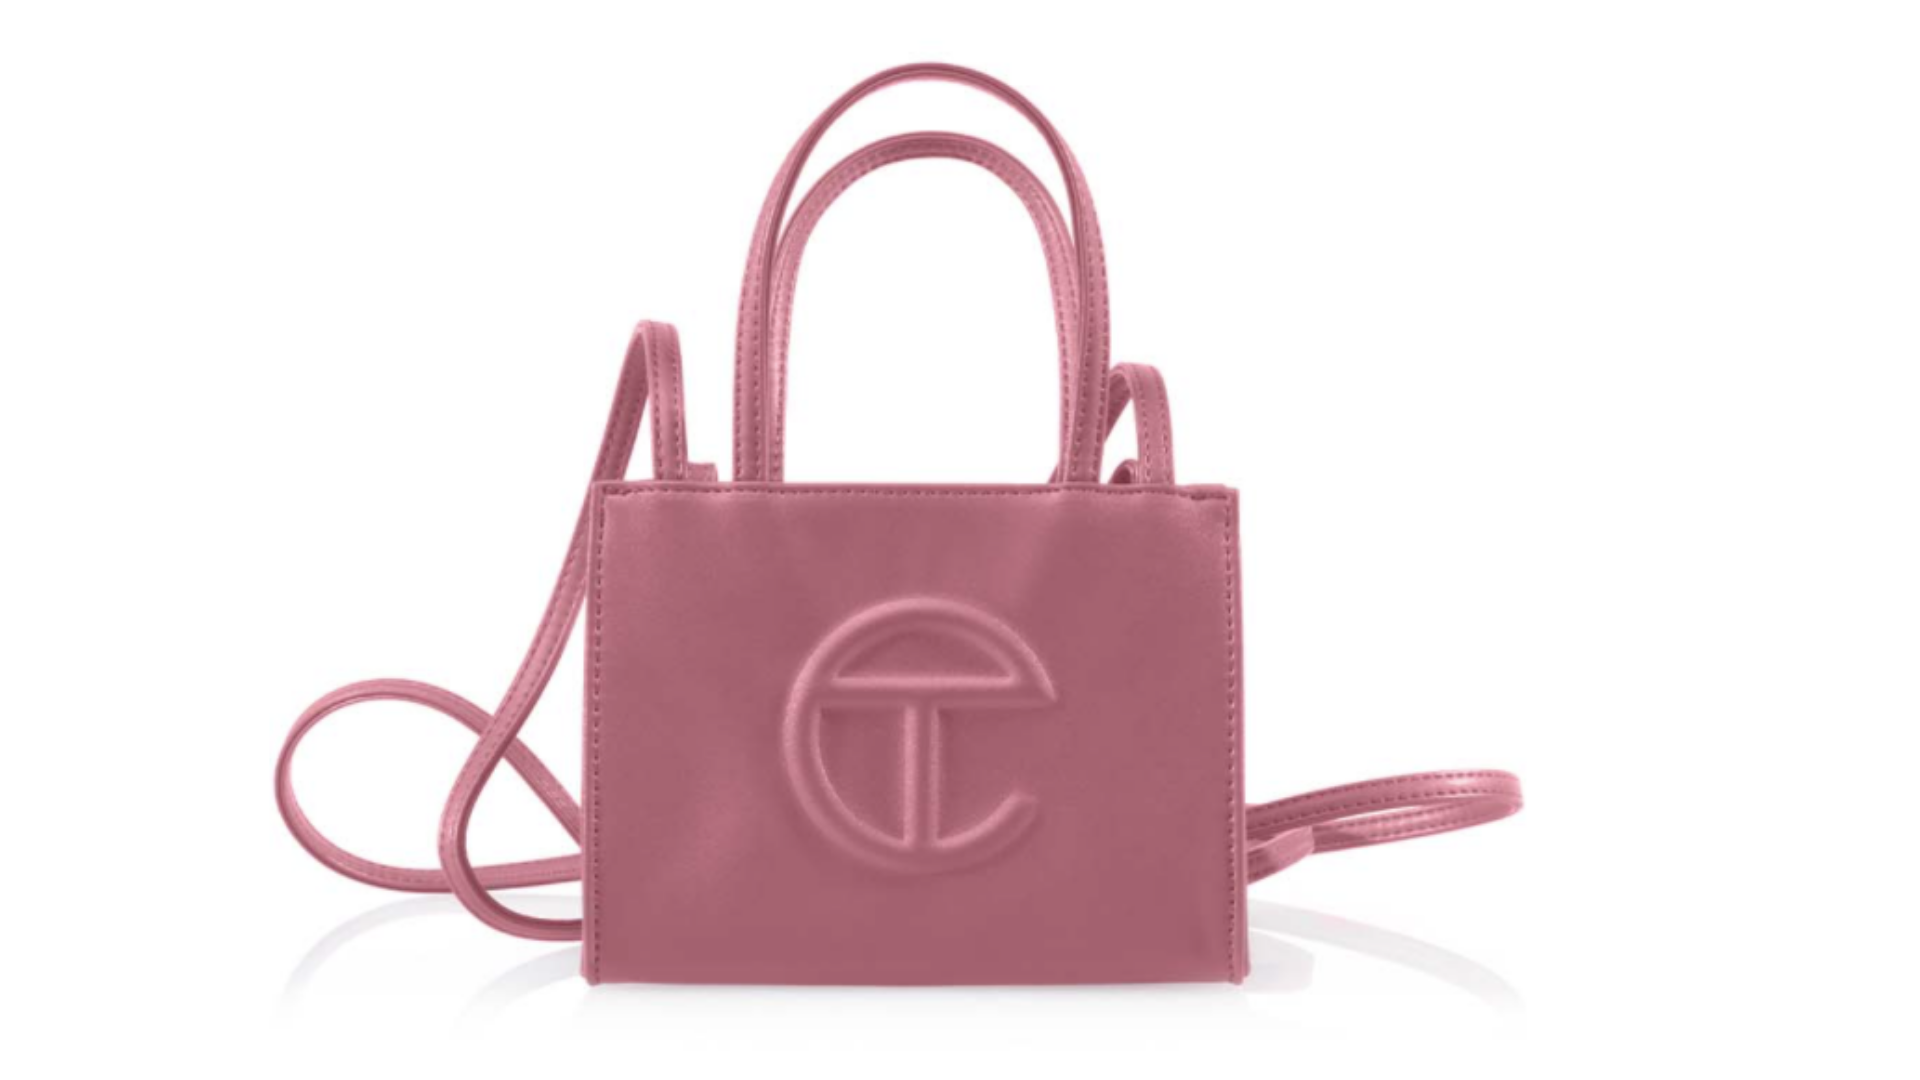 Affordable Luxury Brand Telfar Debuts 'Corned Beef' Bag